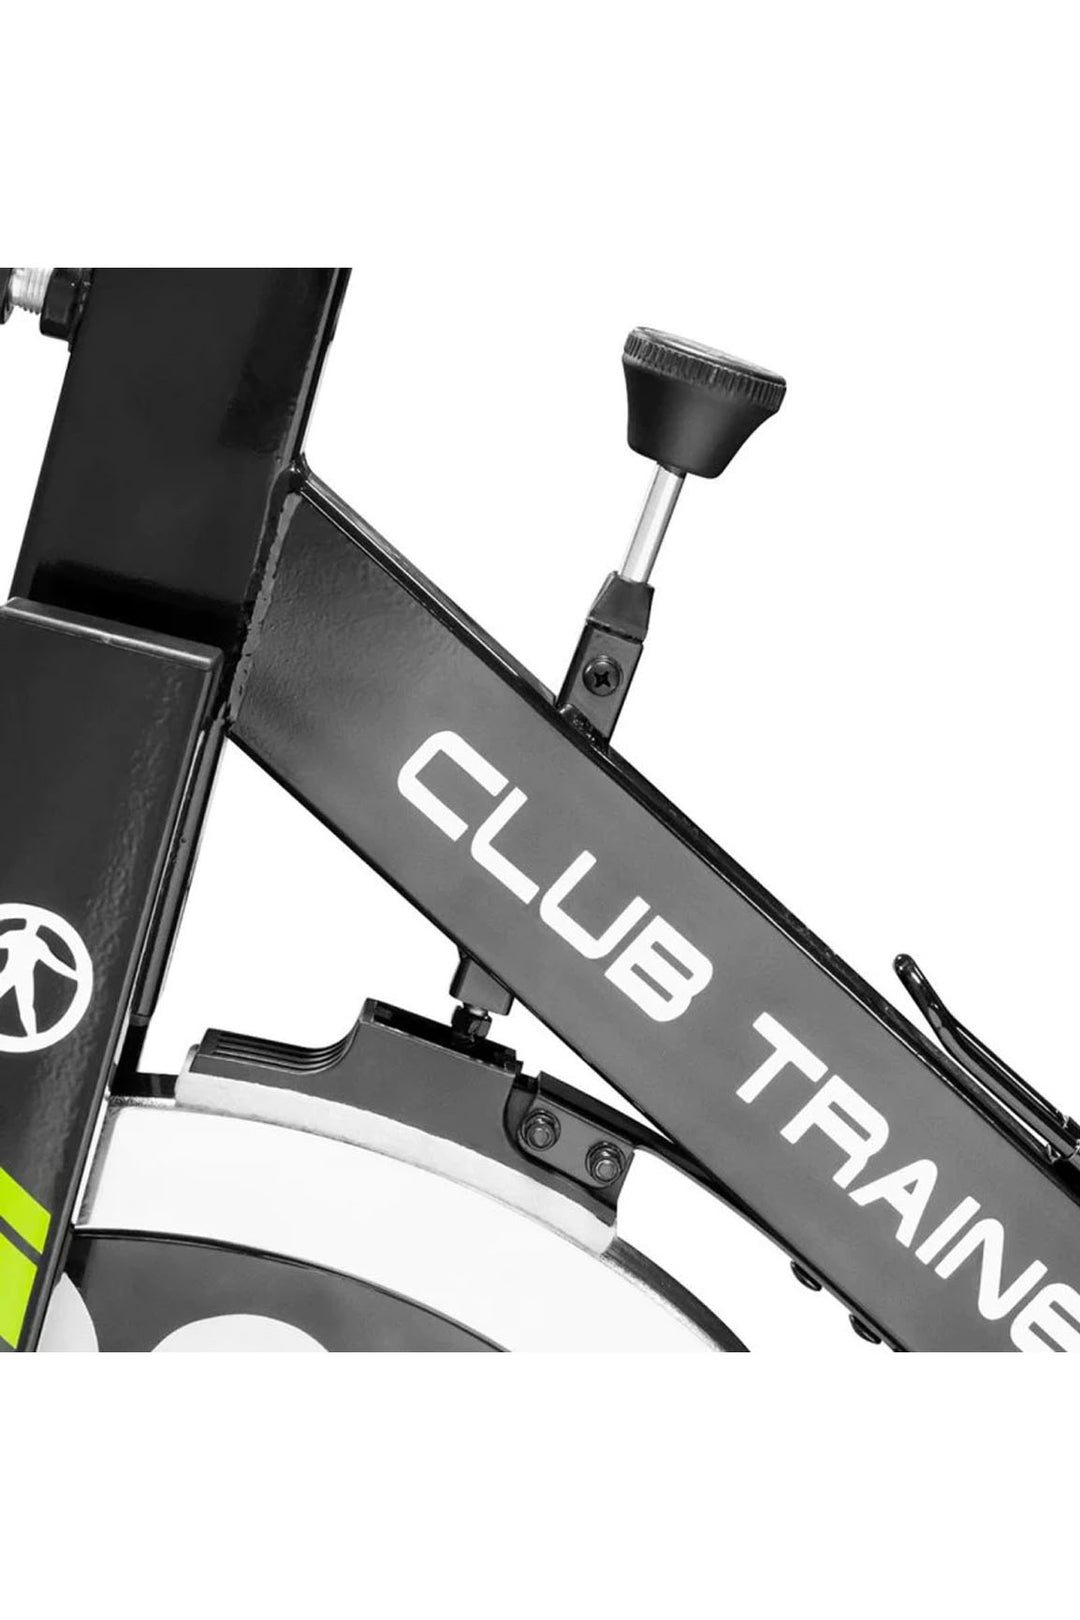 Adjustable knob of Marcy Club Trainer Spin Bike